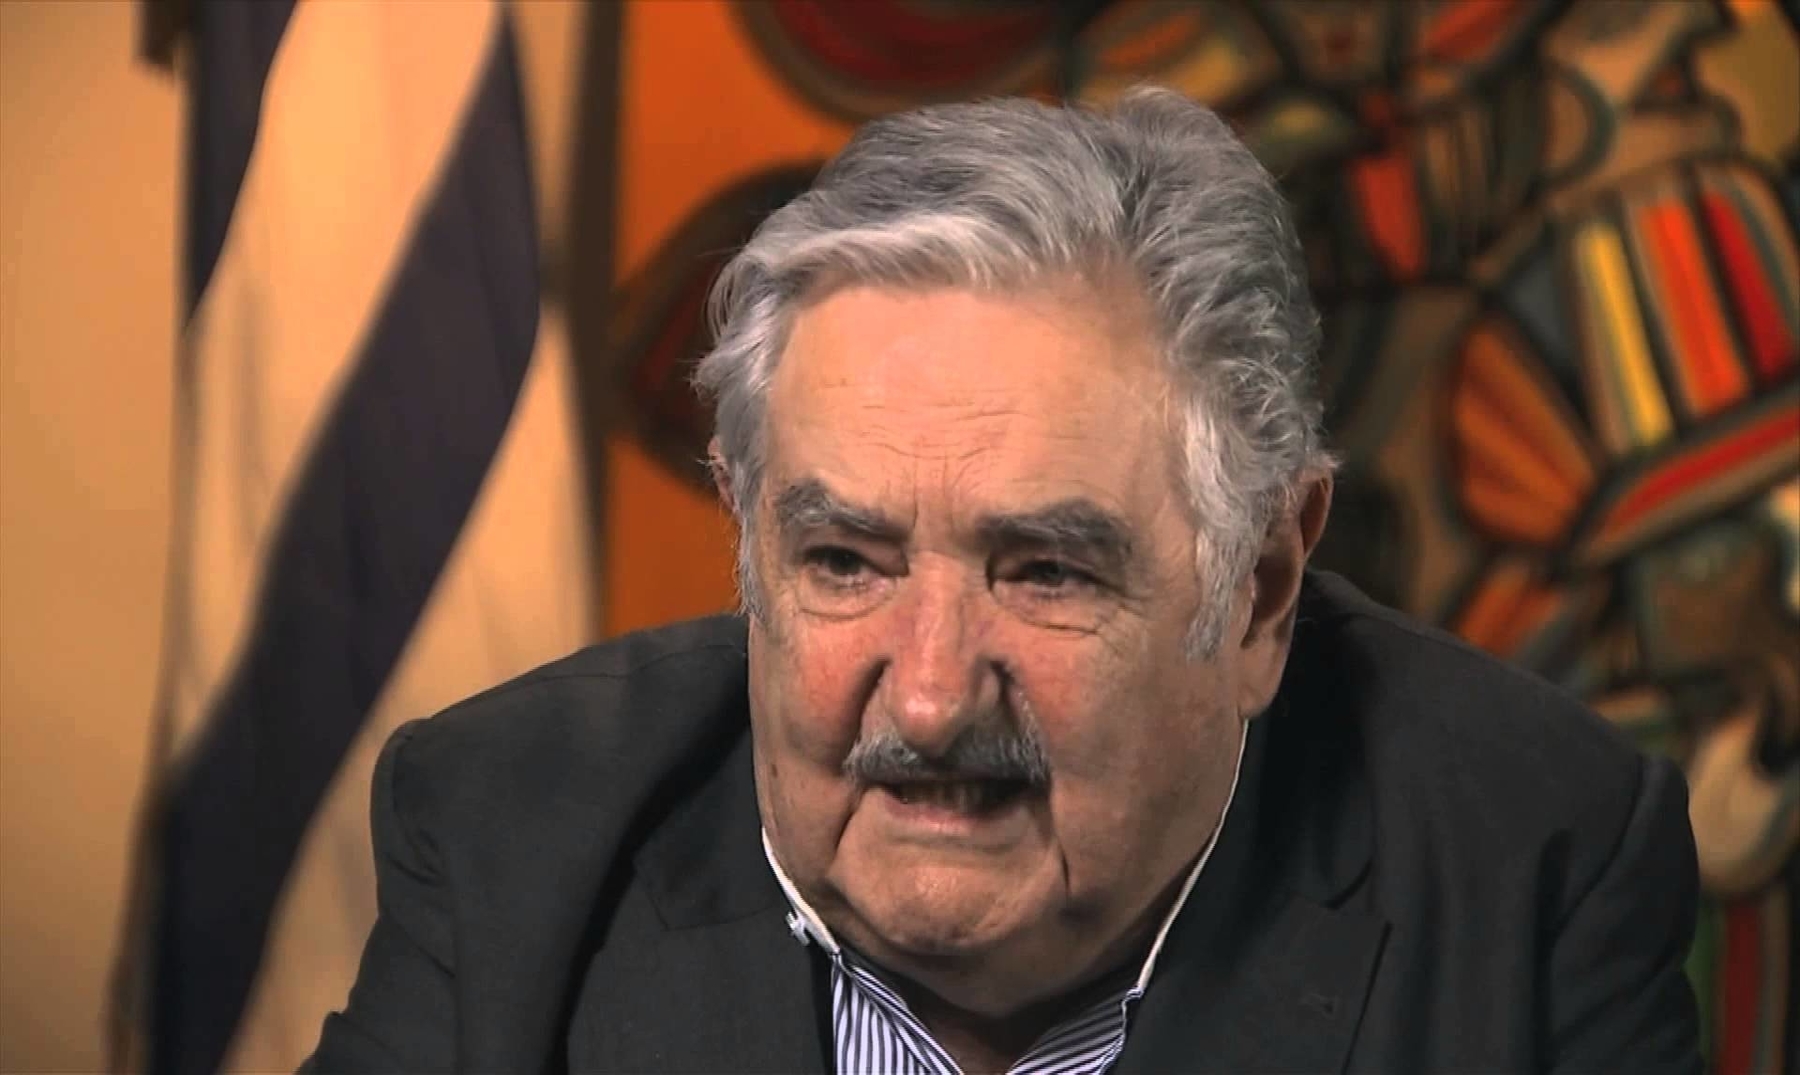 Frases de Pepe Mujica